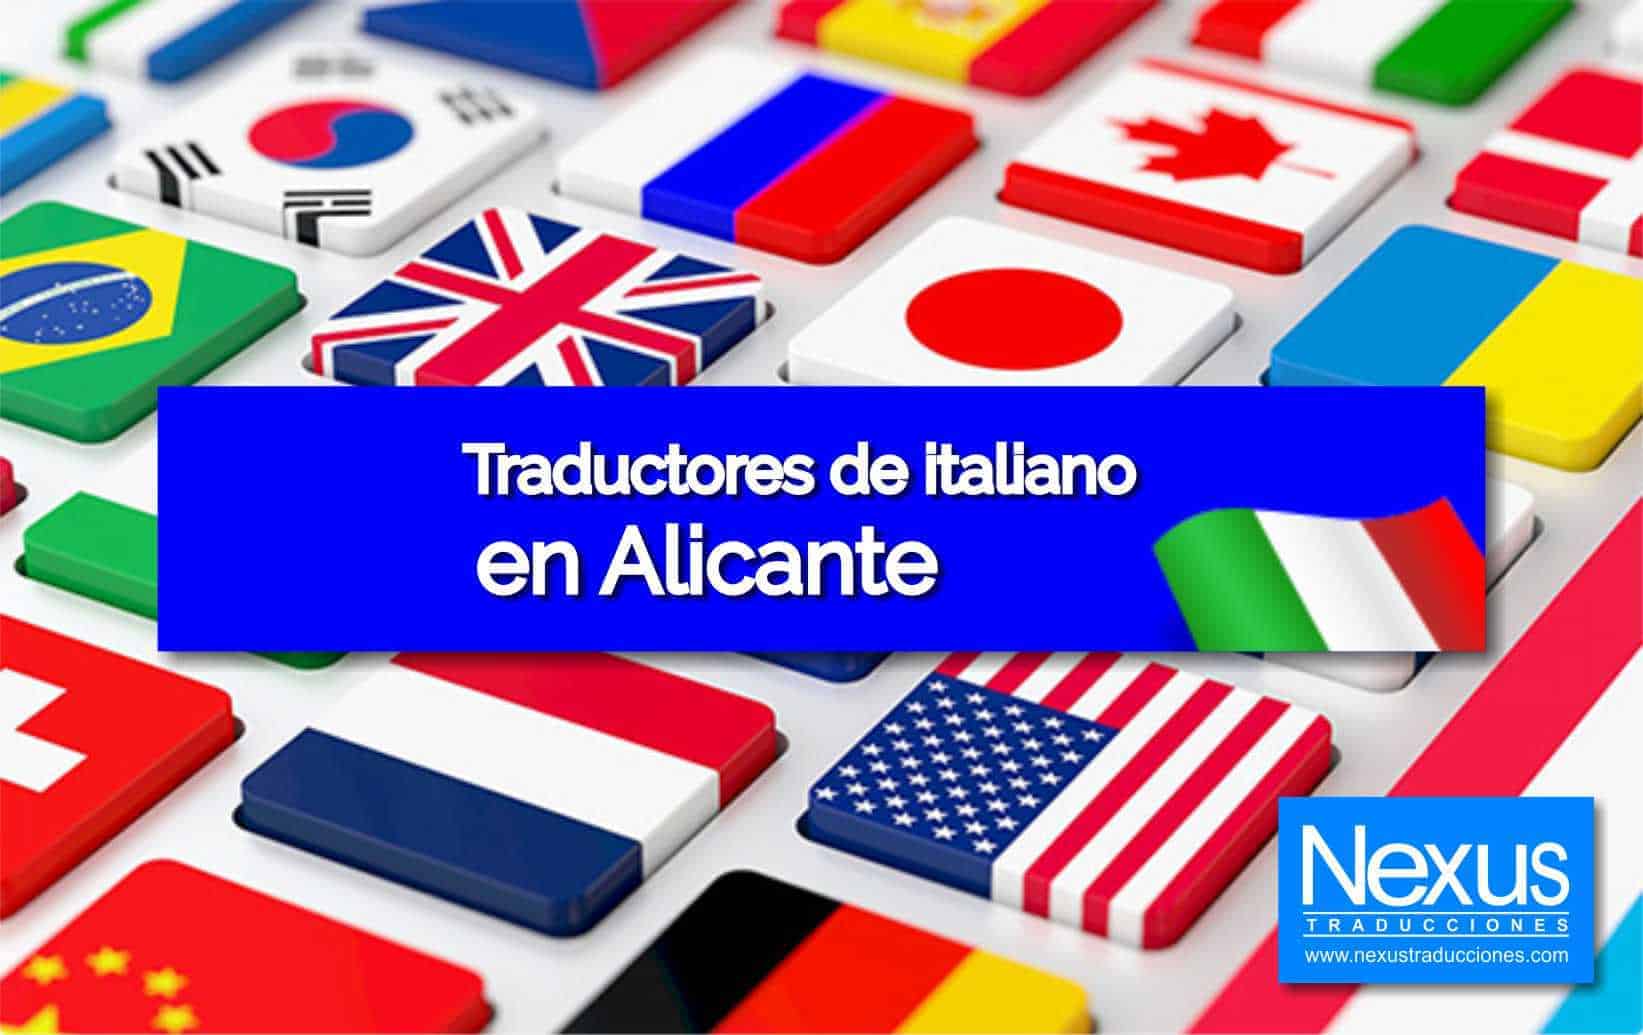 Italian translations in Alicante